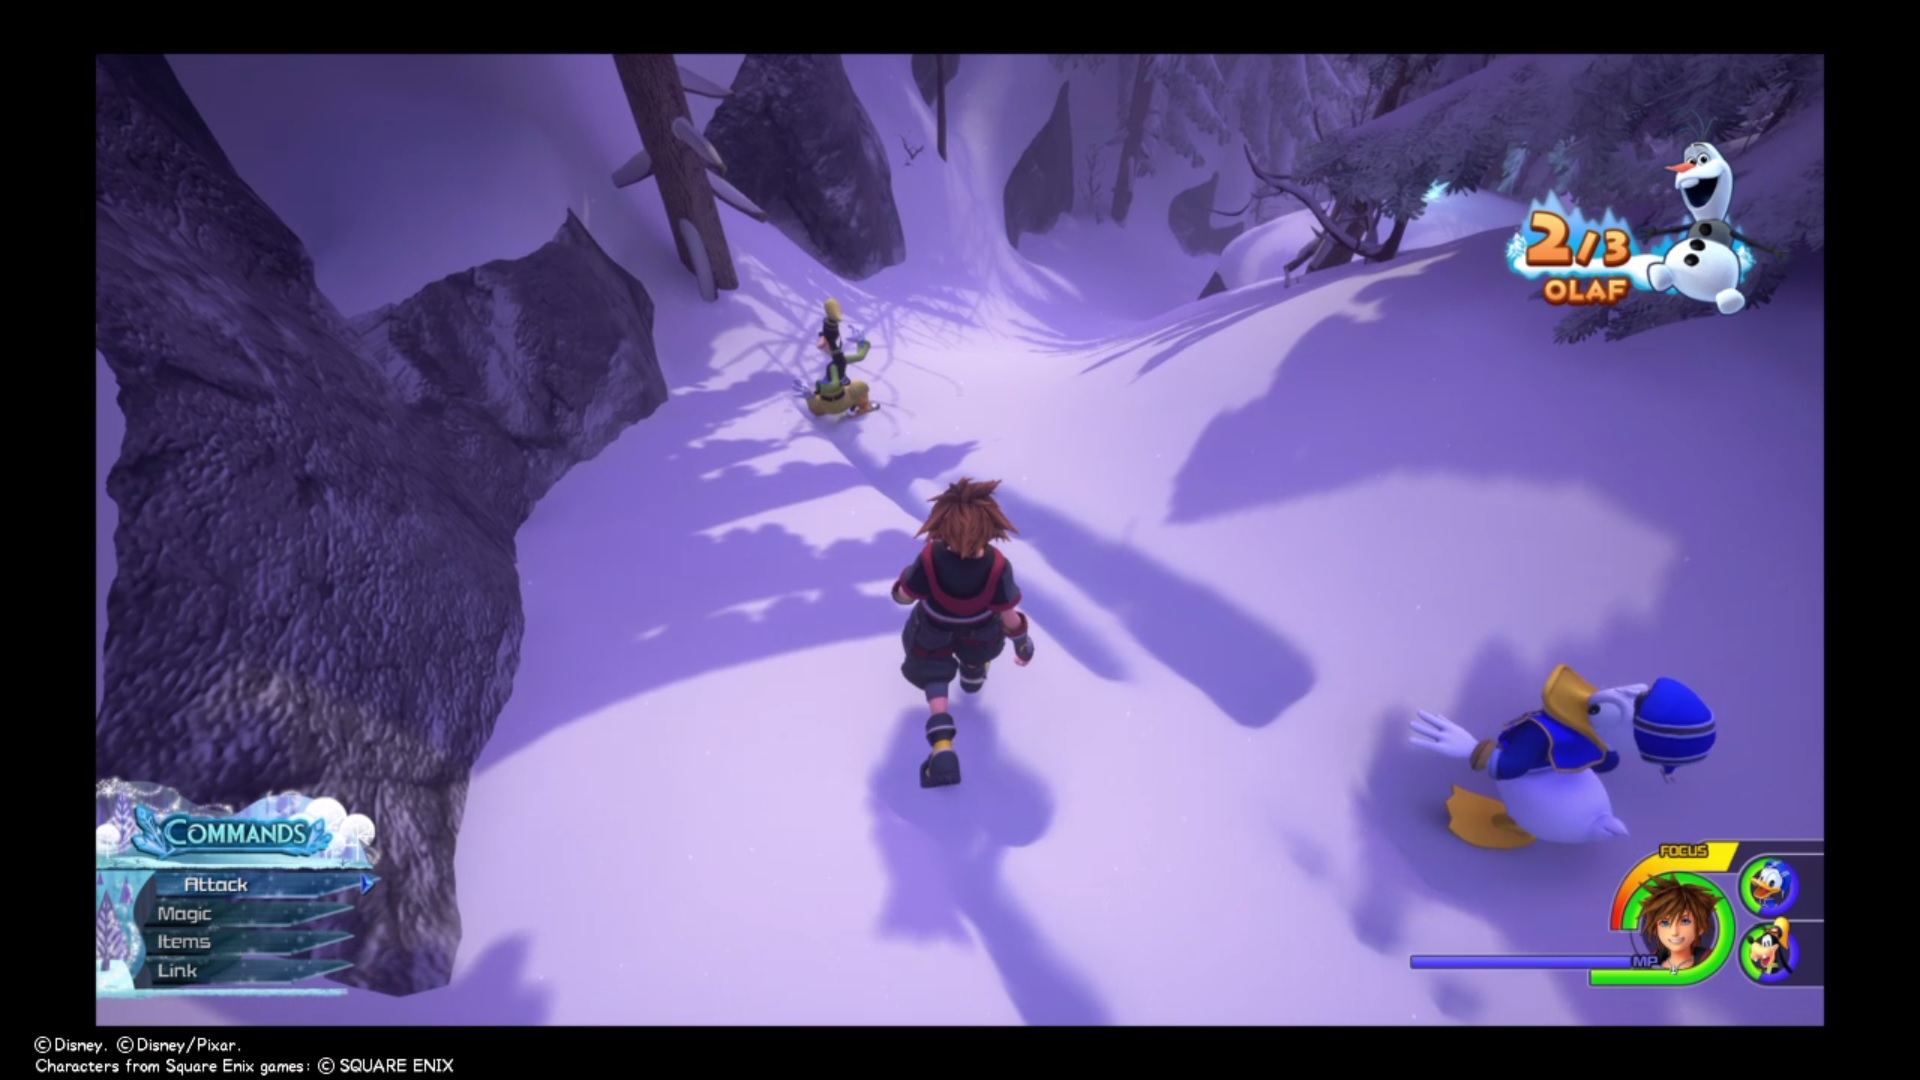 Kingdom Hearts 3 Olaf Pieces location body